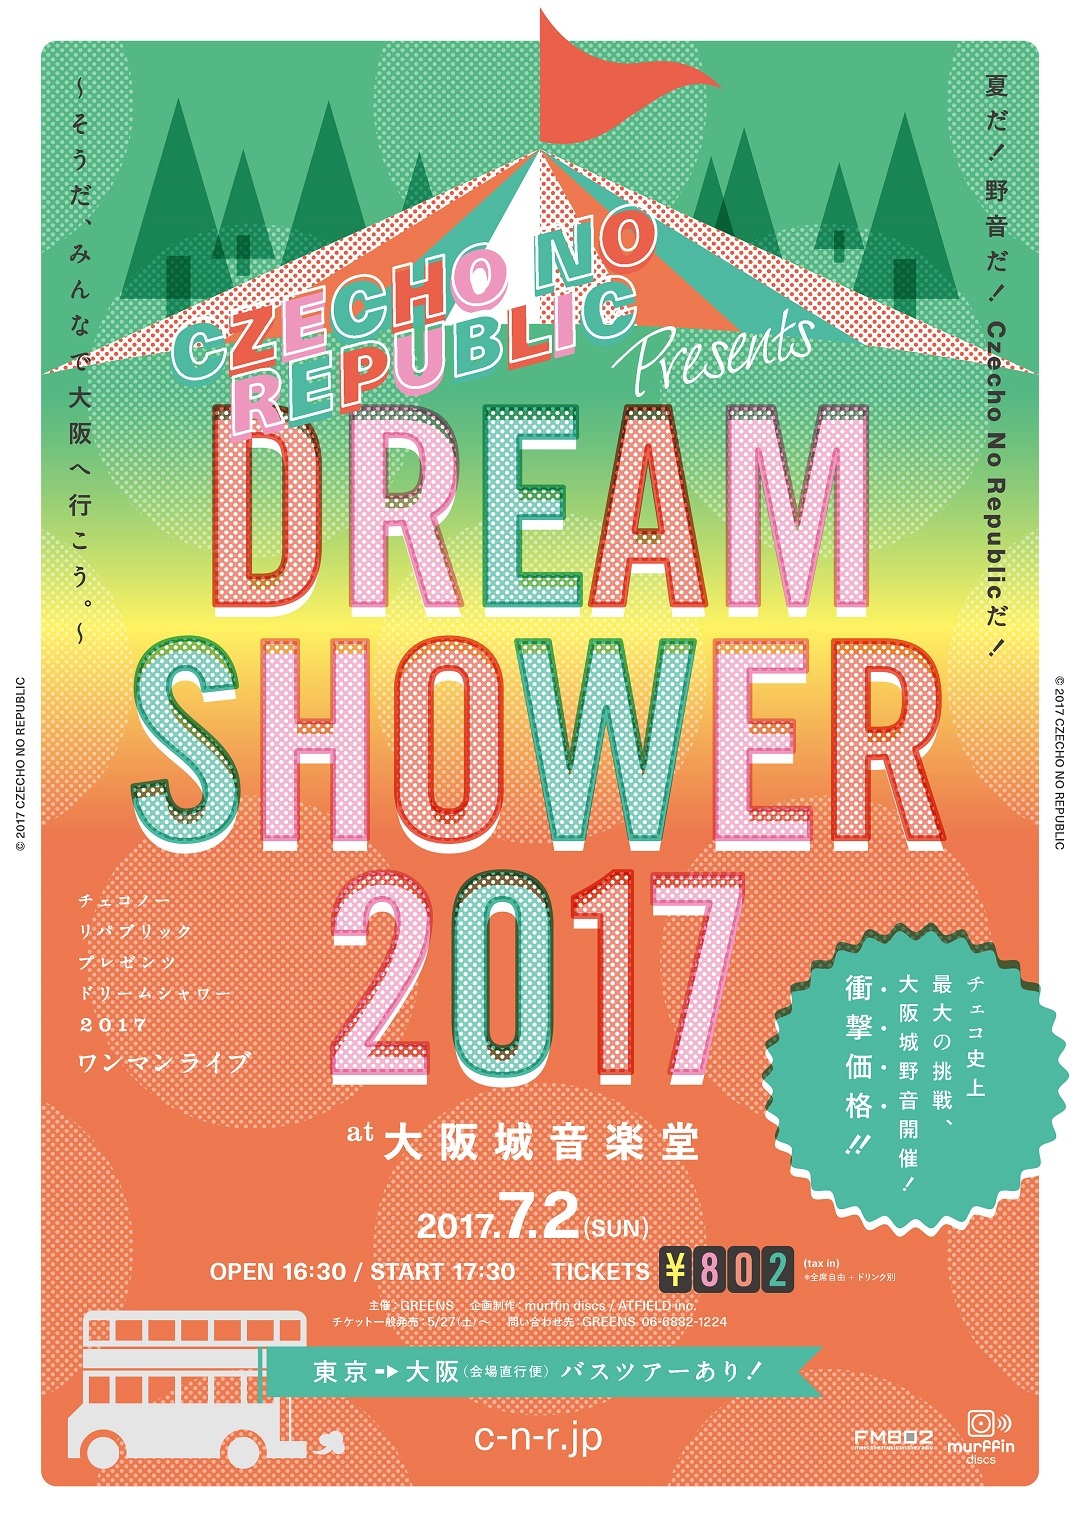 Czecho No Republic presents ドリームシャワー2017 at 大阪城音楽堂 夏だ！野音だ！Czecho No Republicだ！～そうだ、みんなで大阪へ行こう。～